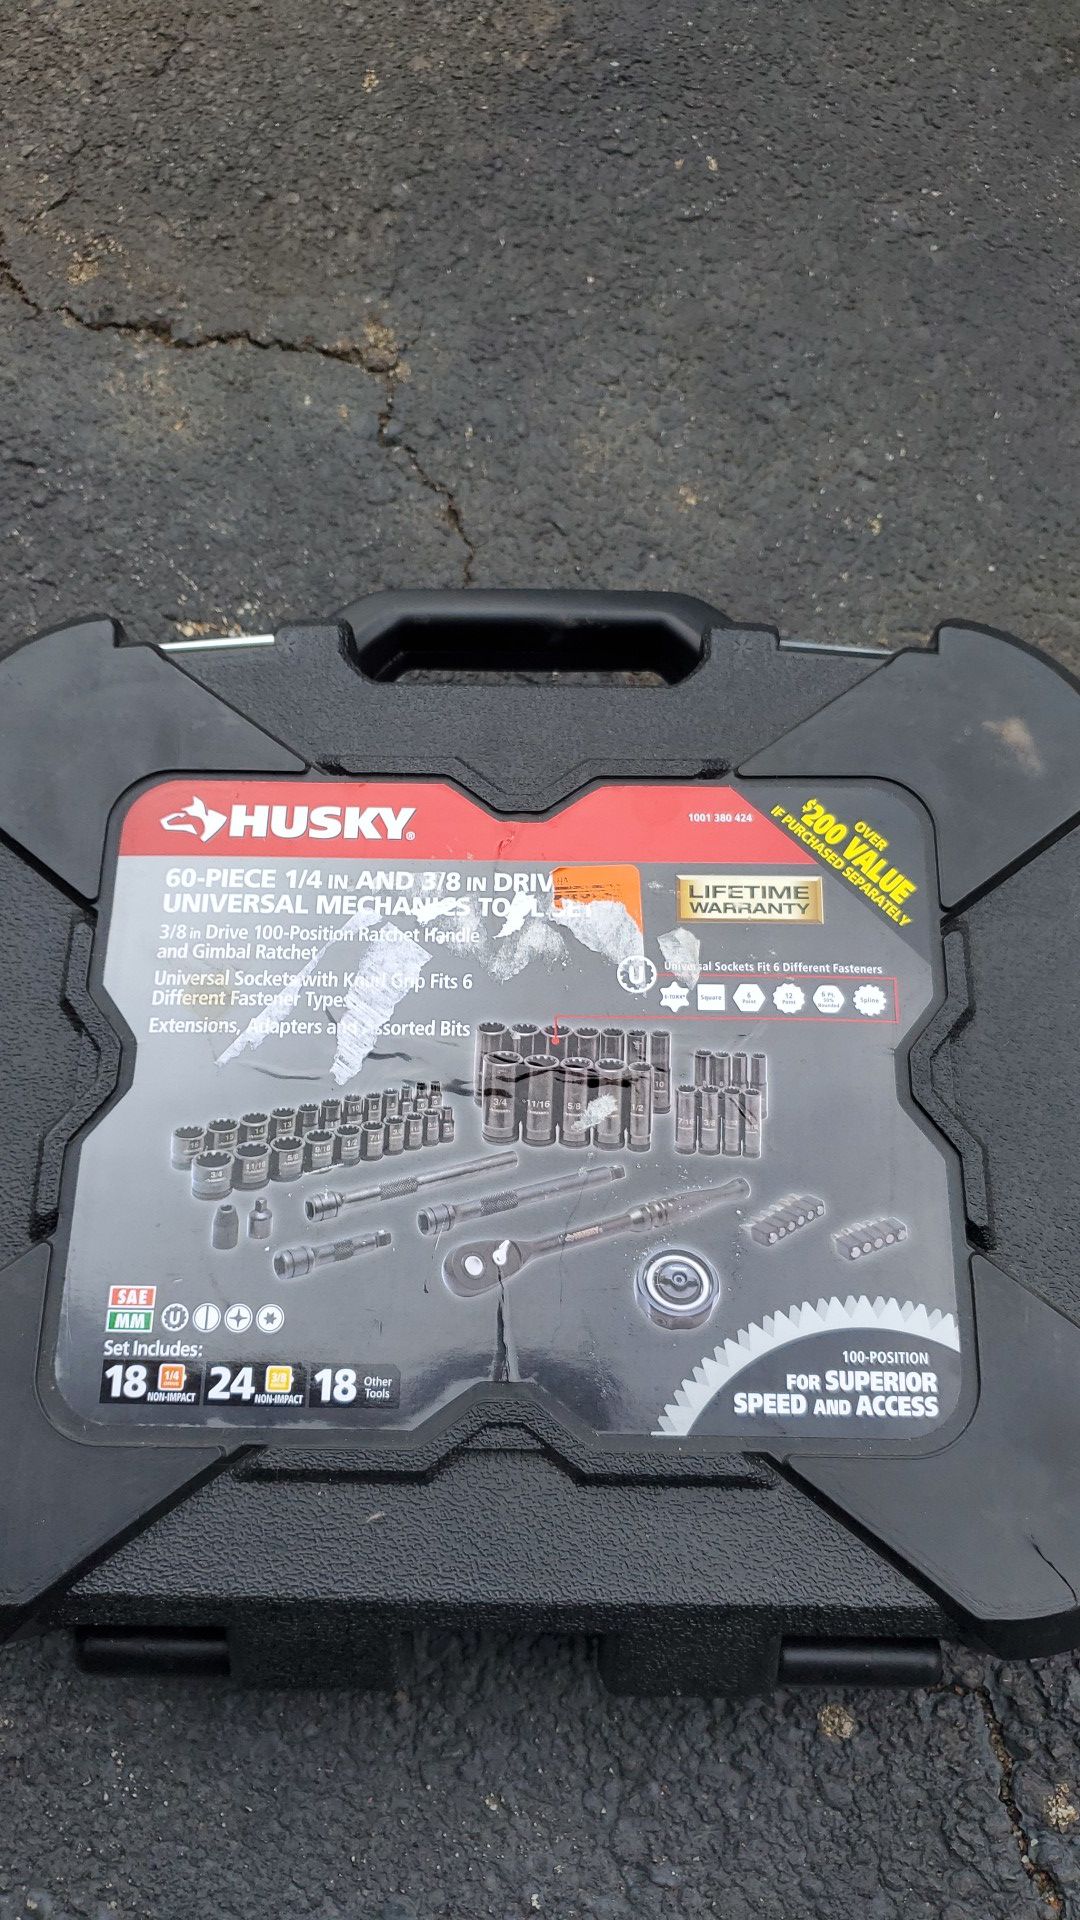 Husky 60 piece mechanics tool set